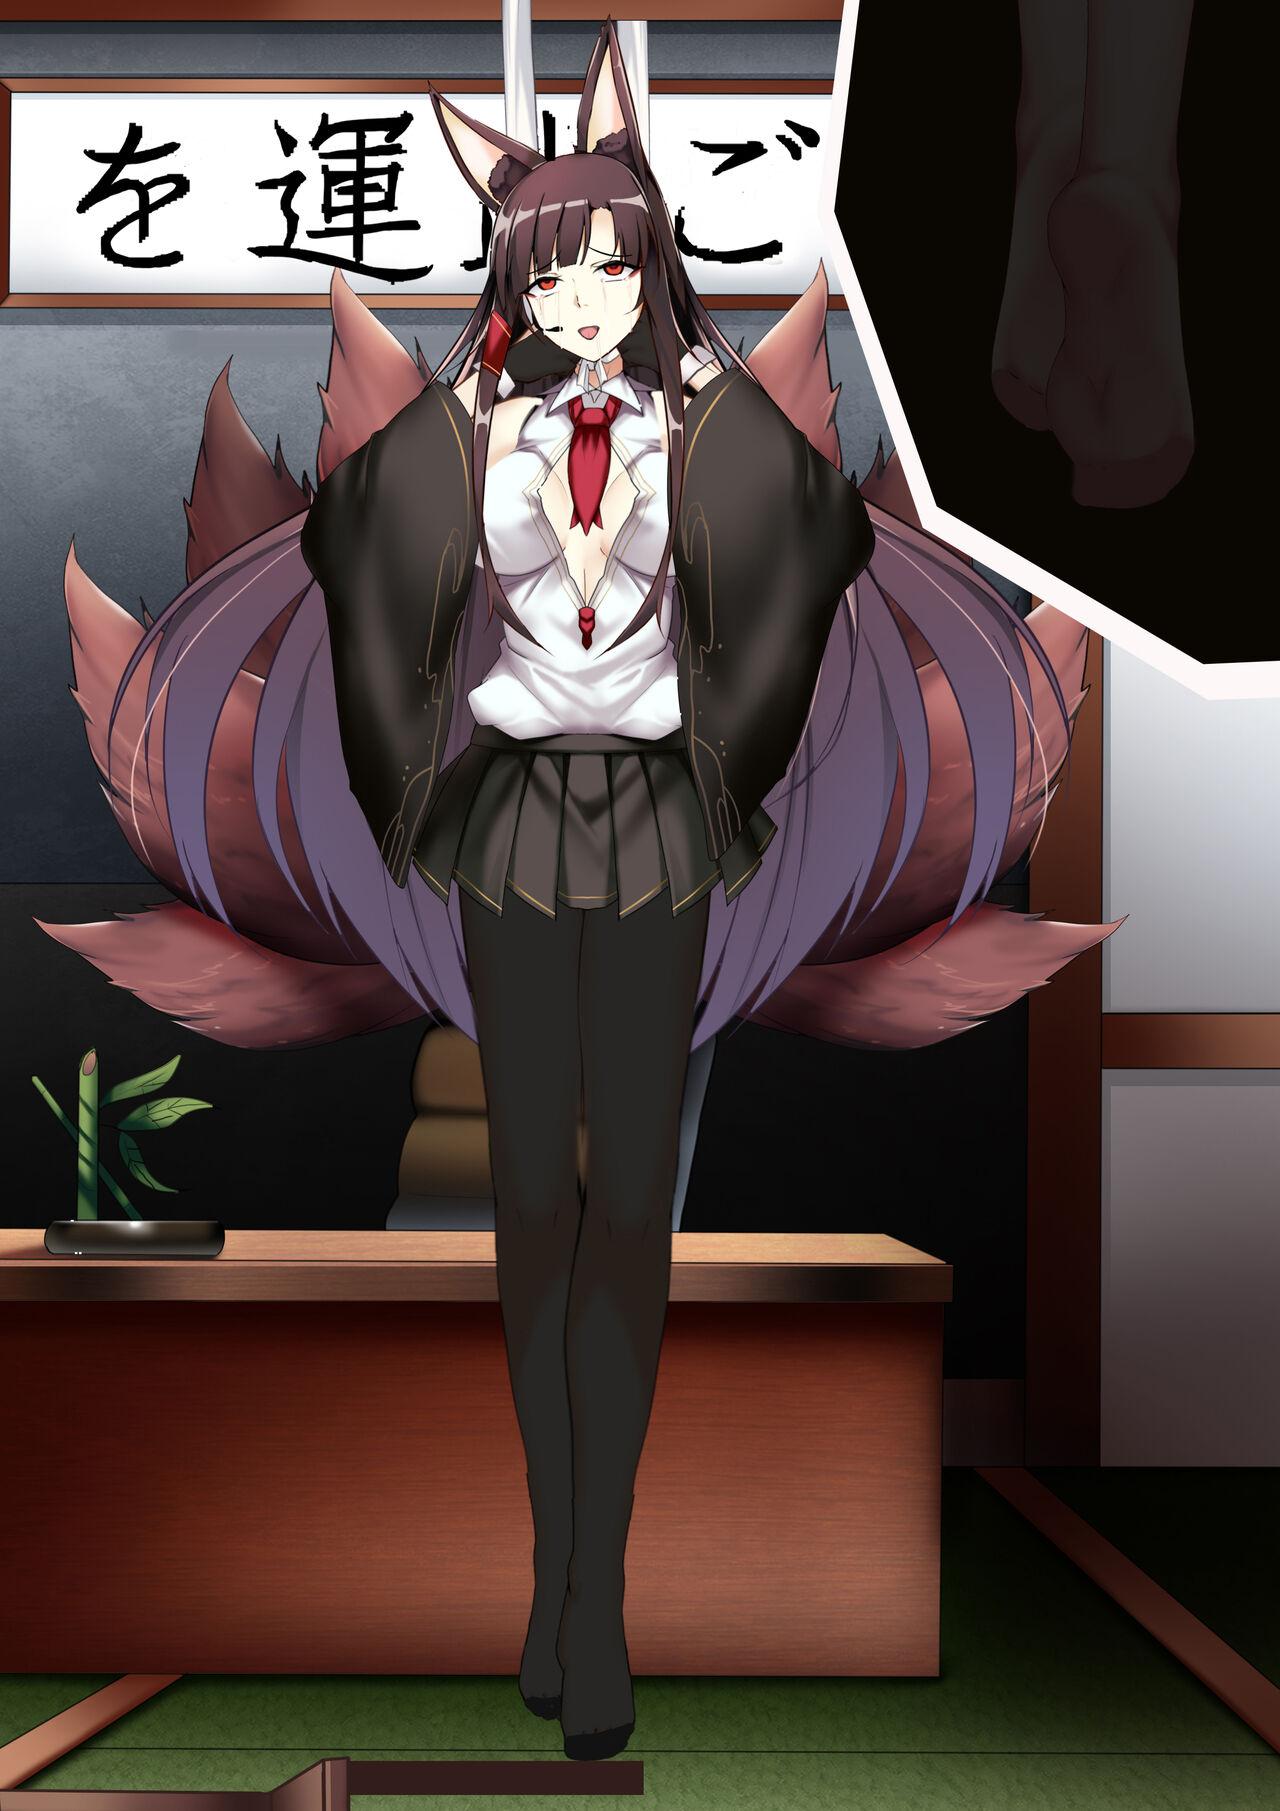 Akagi hanged herself in her office 37